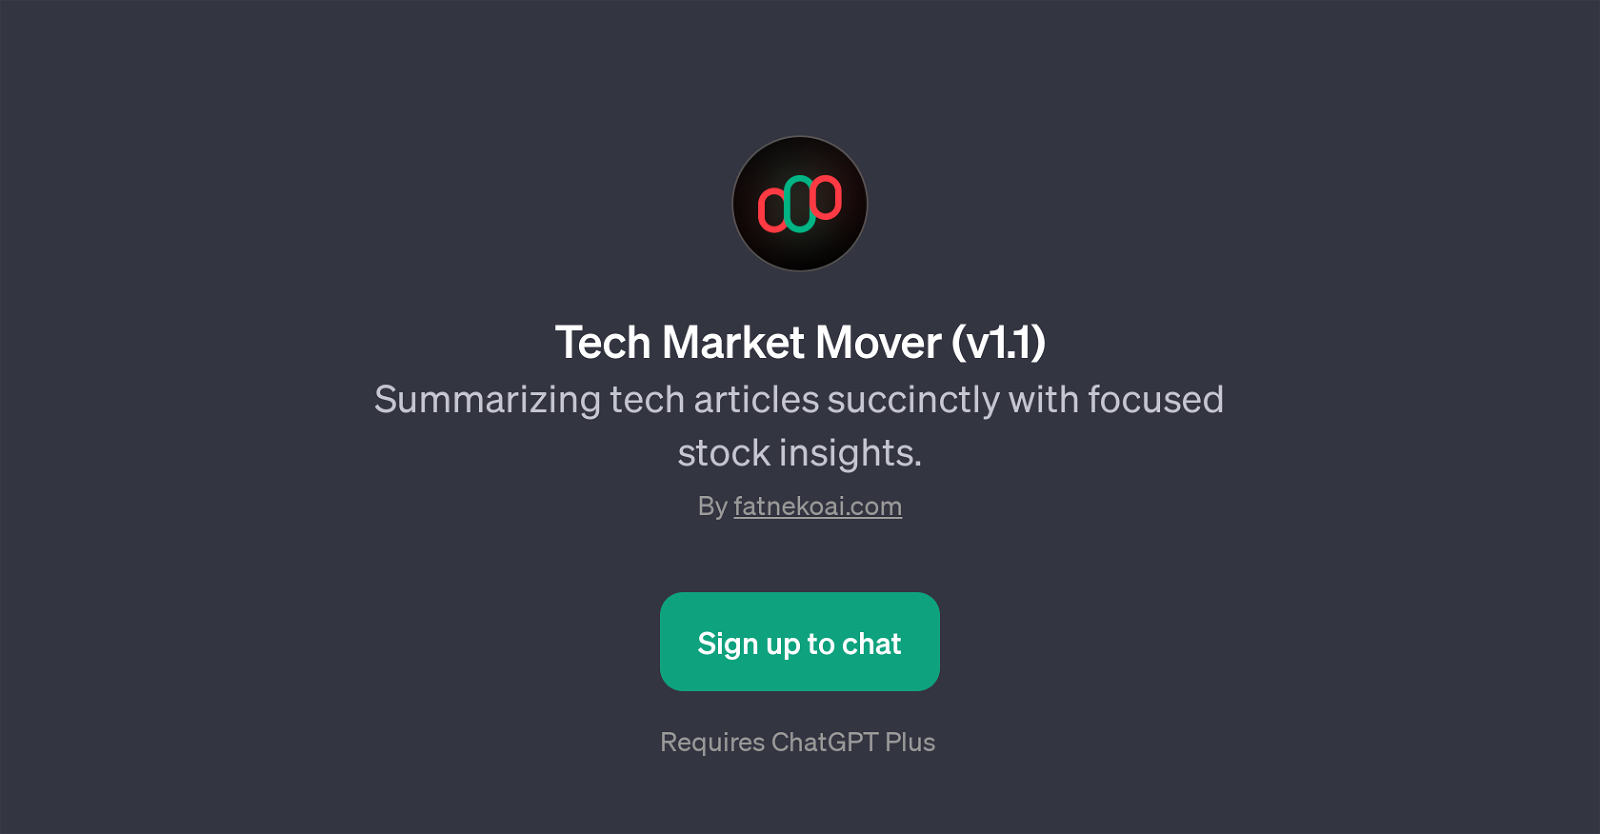 Tech Market Mover (v1.1) website